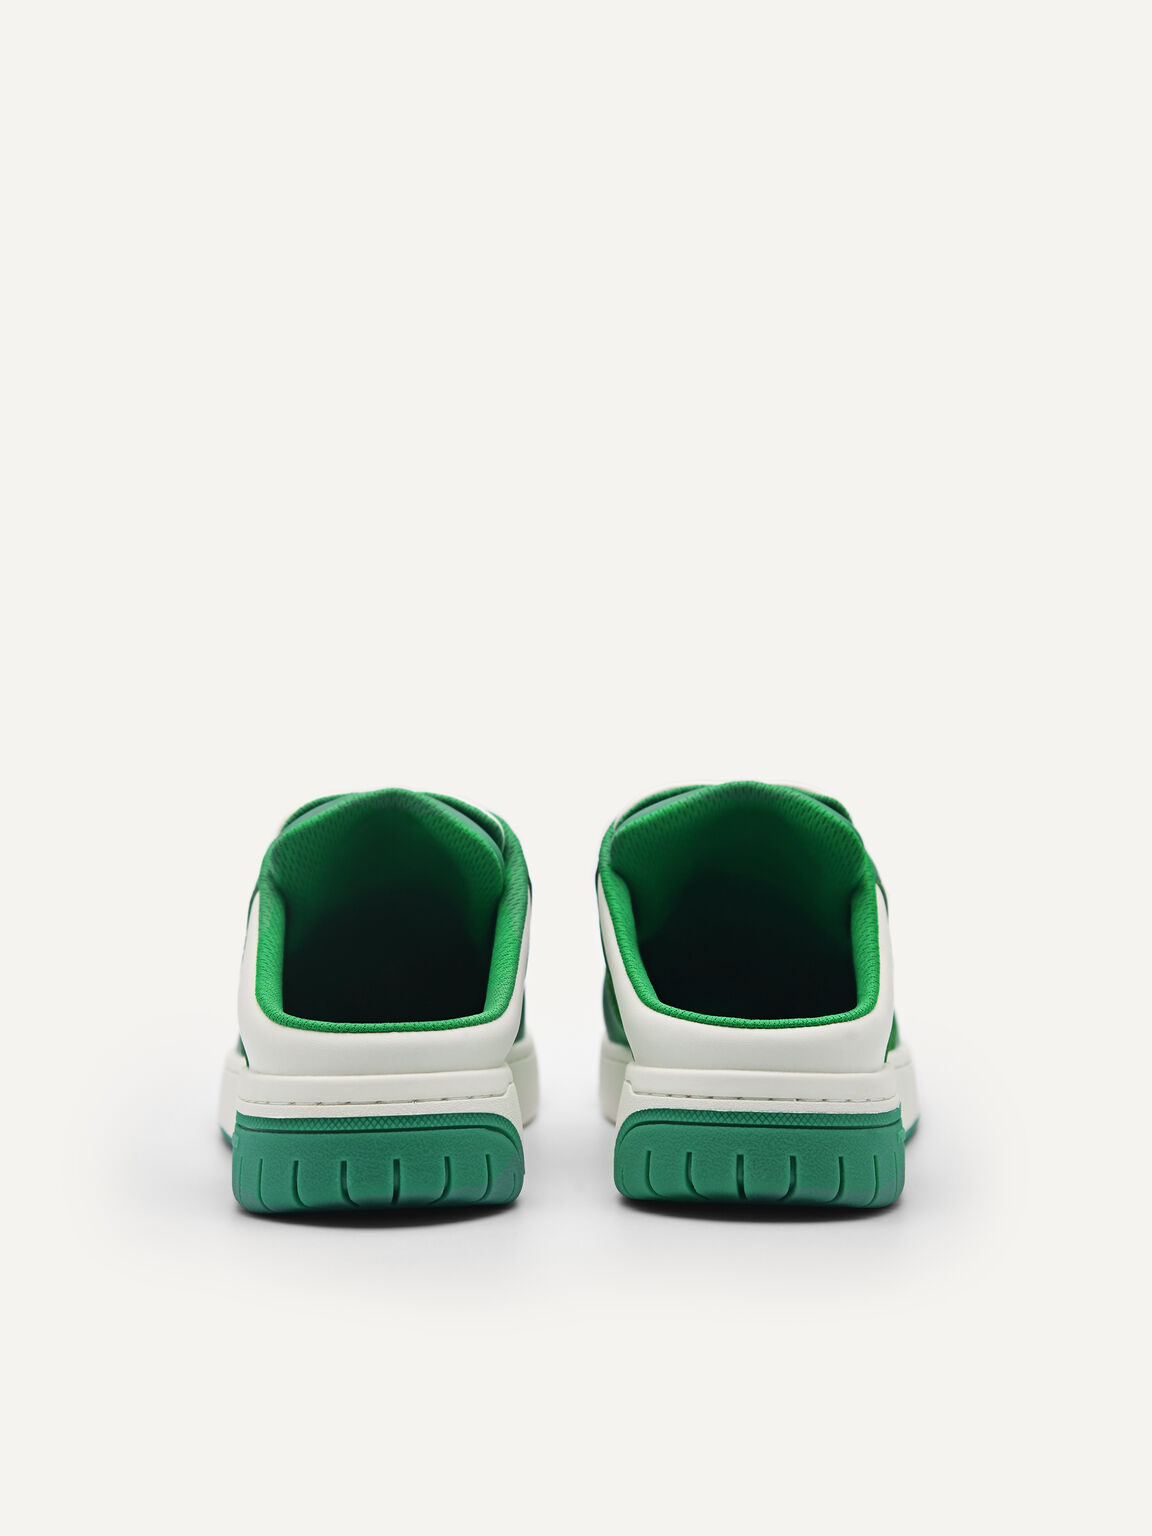 EOS Slip-On Sneakers, Green